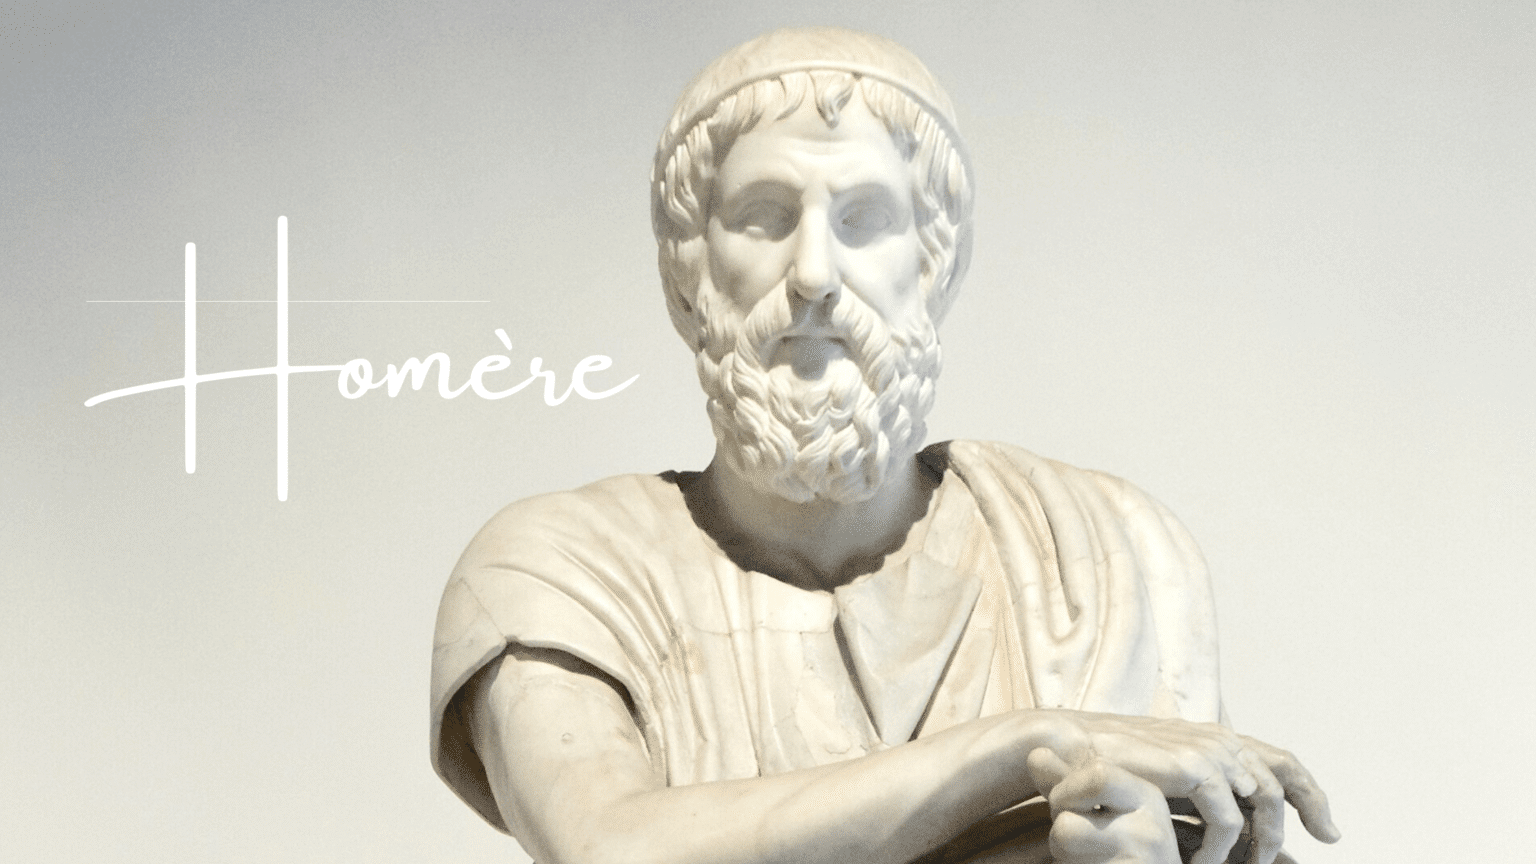 Homère, célèbre poète grec